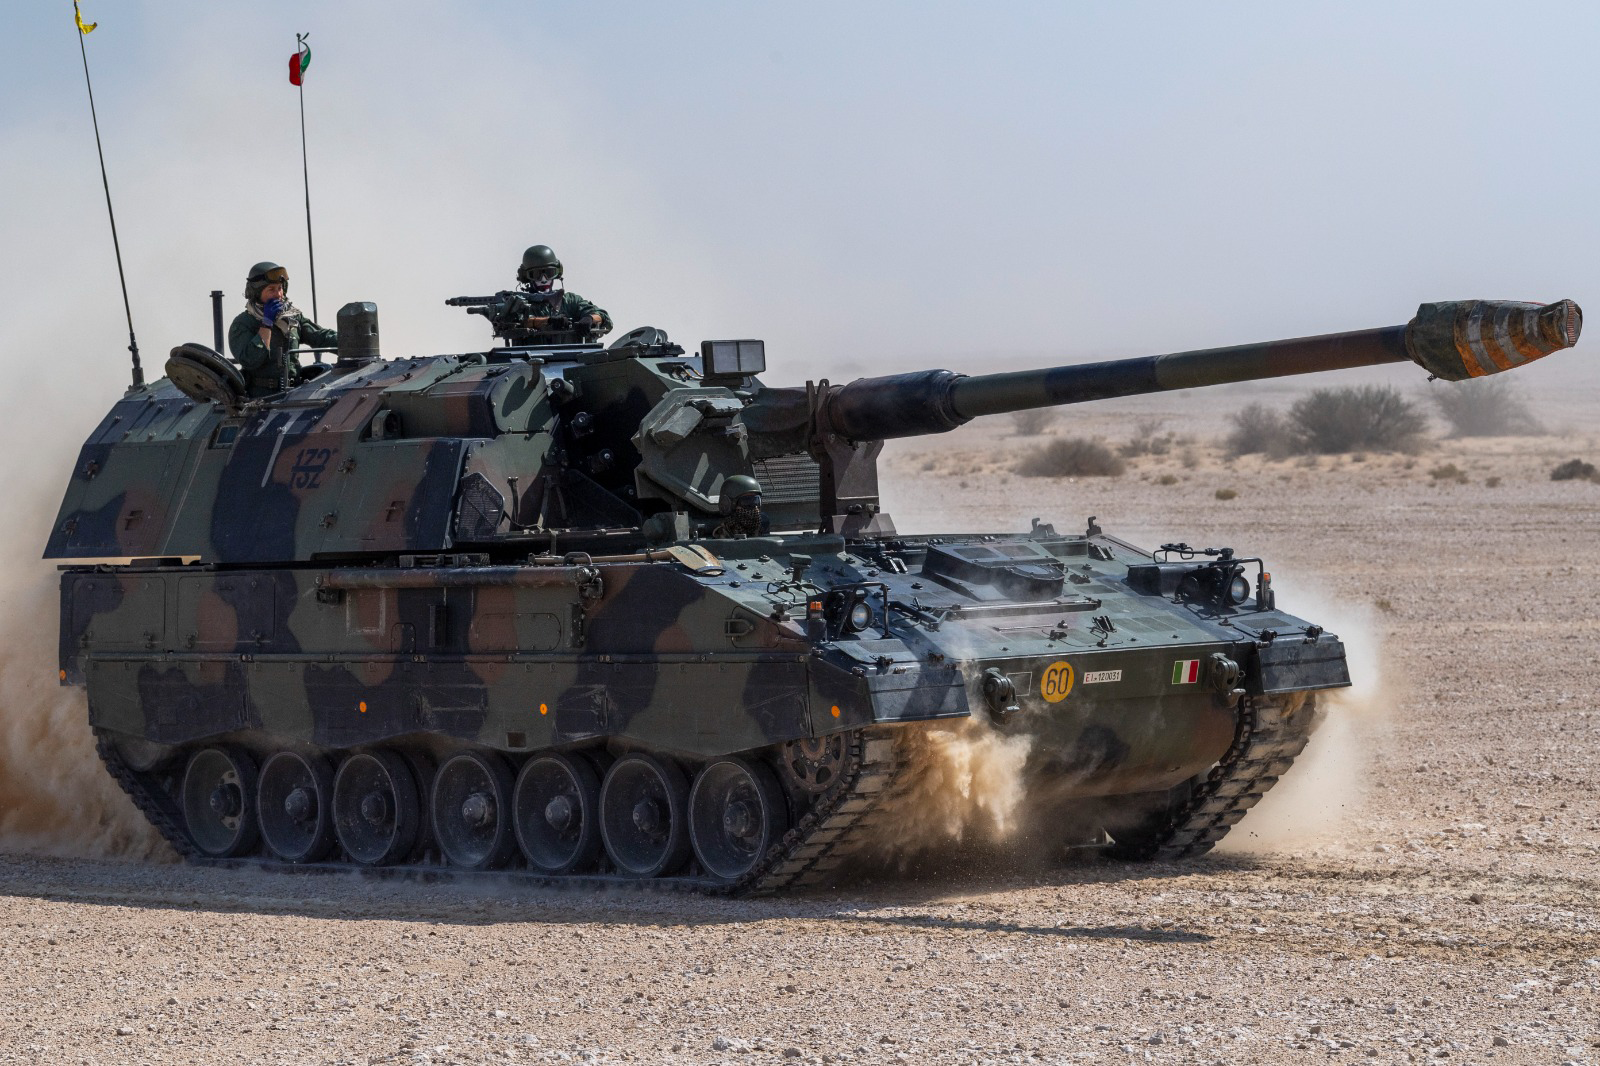 Italian_Army_-_132nd_Field_Artillery_Regiment_"Ariete"_PzH_2000_self-propelled_howitzer_in_Qatar.png